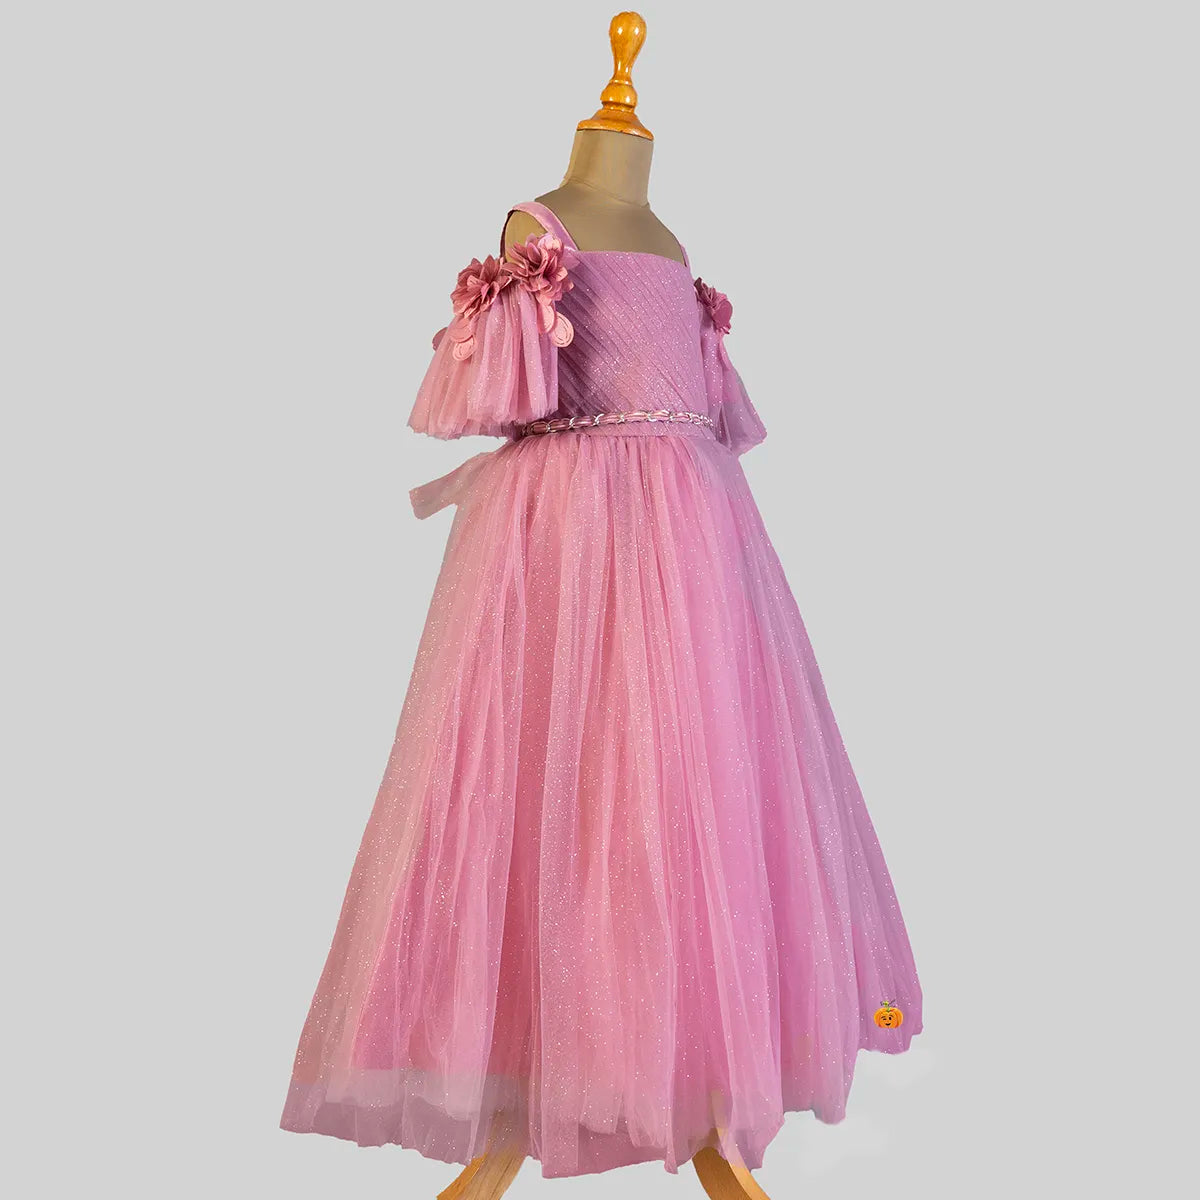 Girl Baby 1st Birthday Dress (Ready to Ship for 1-2 years)  IBFGBD-JSD-556GB-B Peach Girls Birthday Party Dress Online – iBuyFromIndia